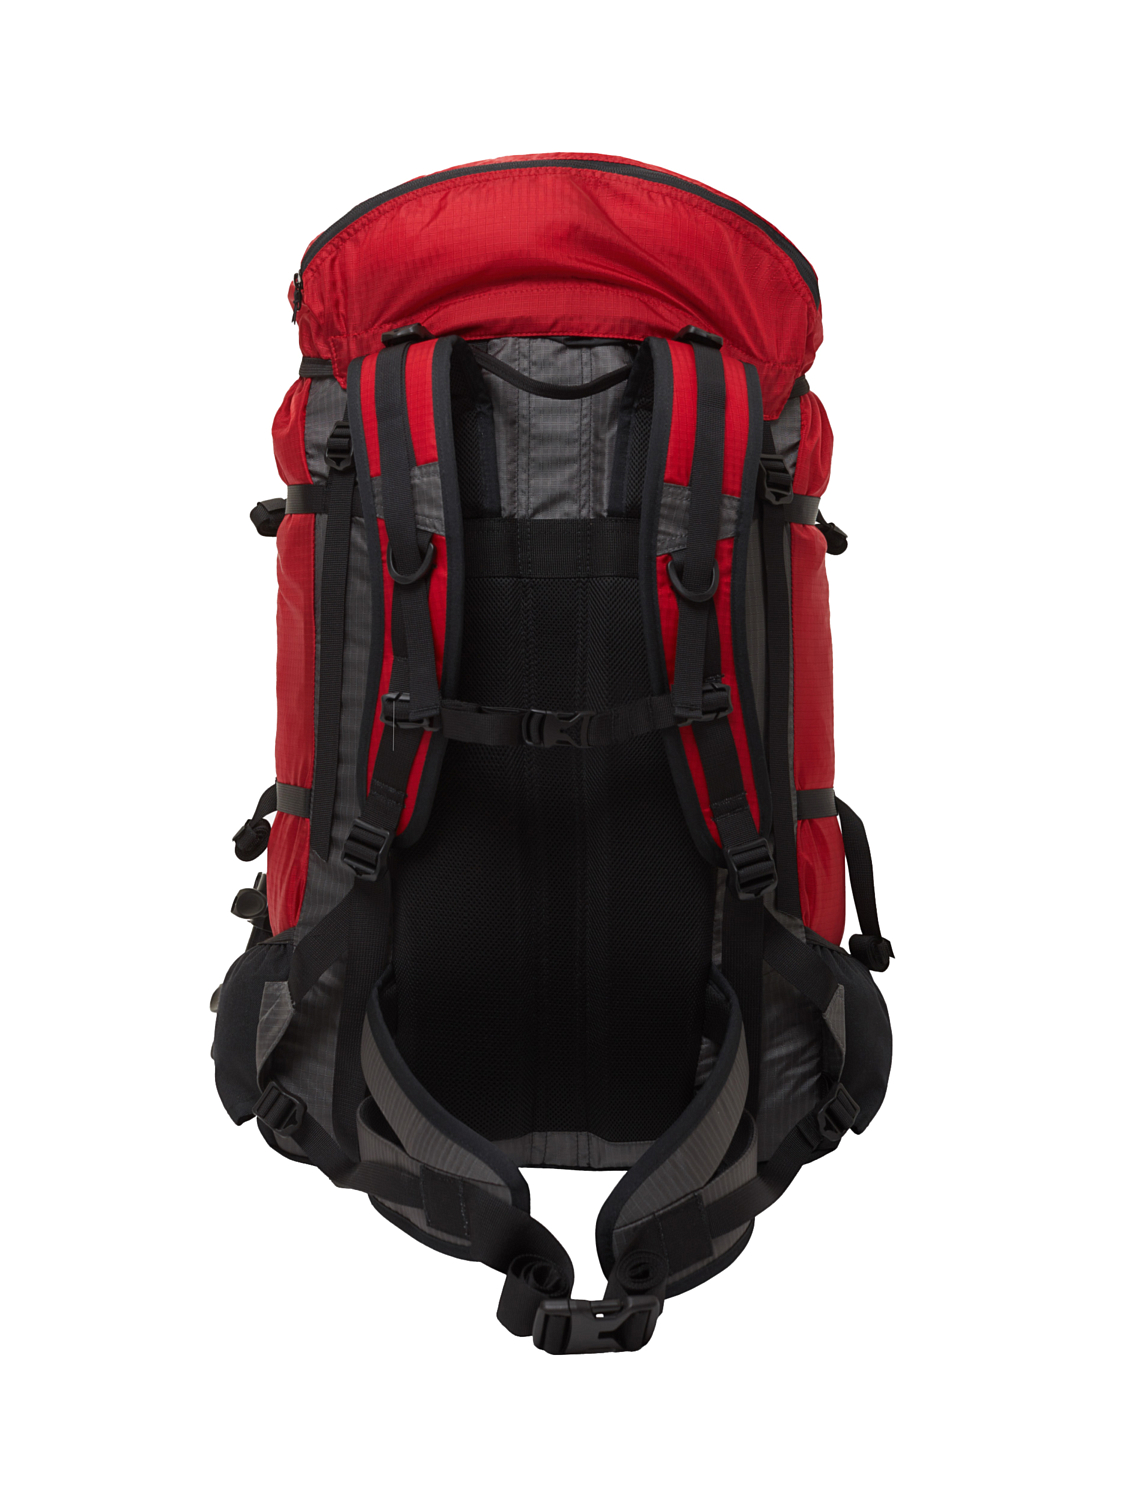 Рюкзак BASK Light 69 красный/темно-серый